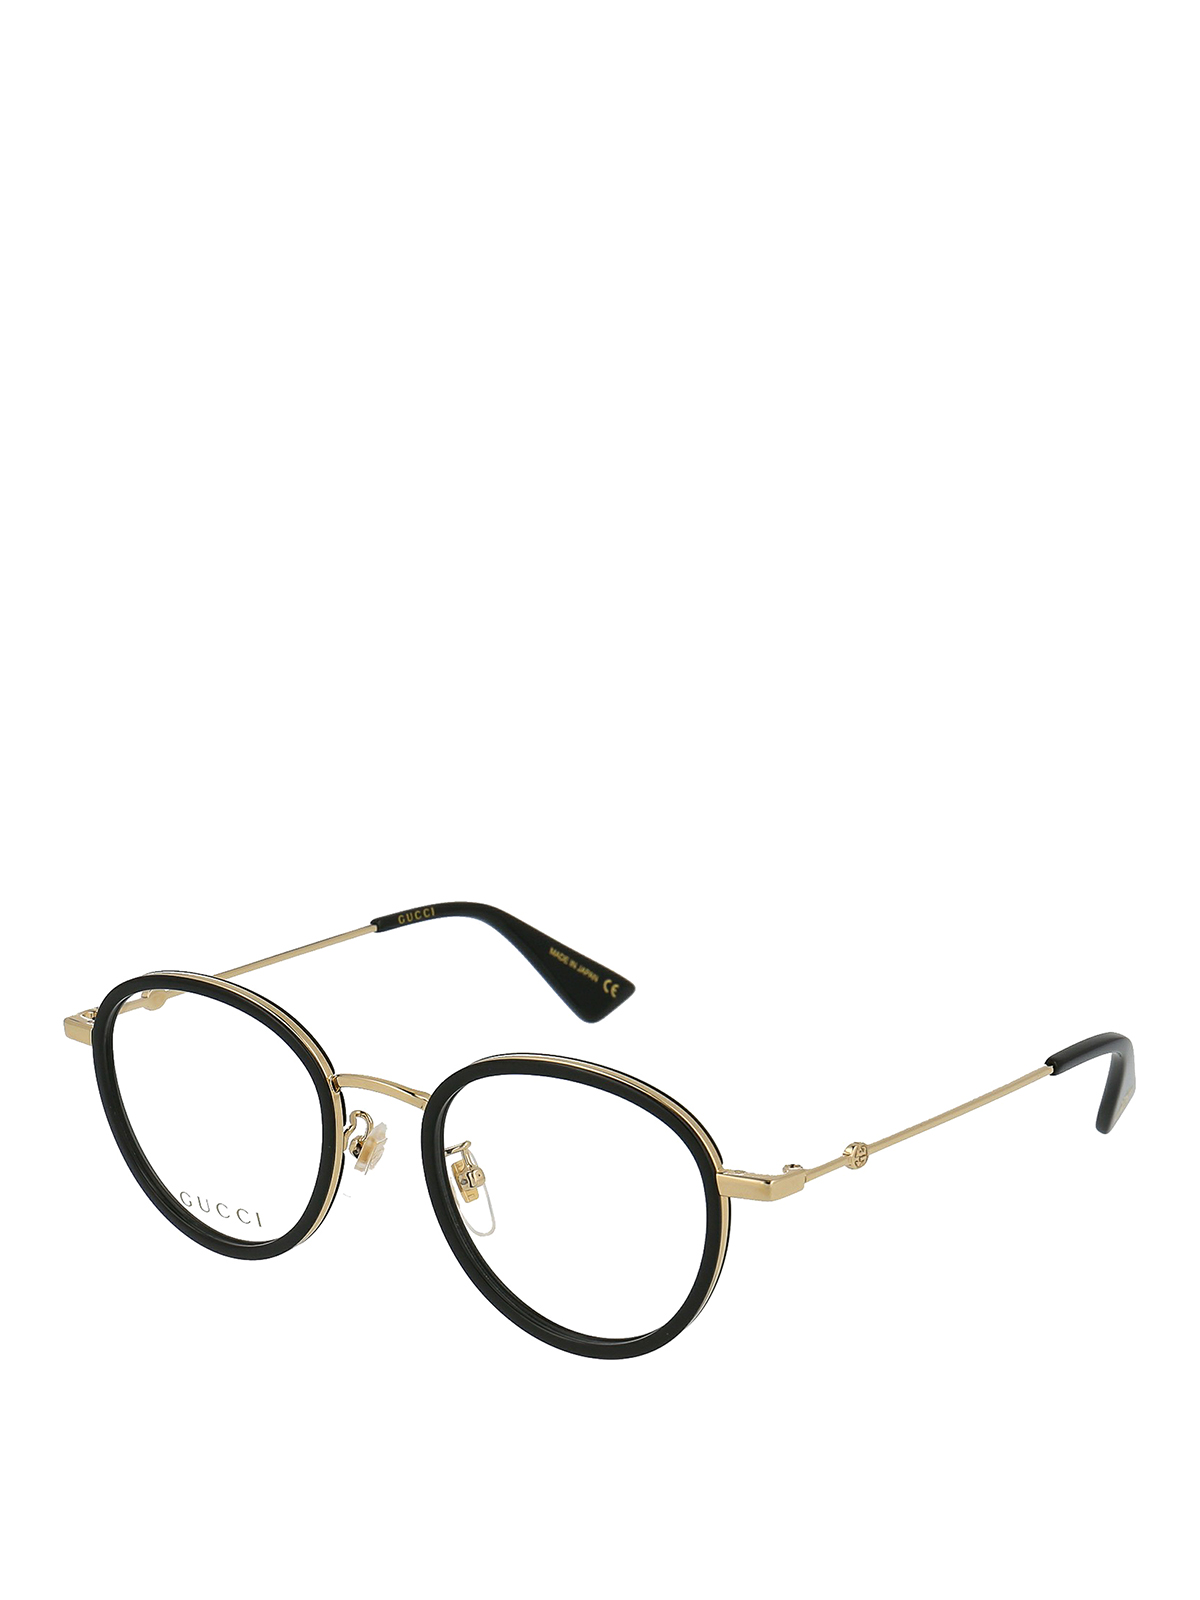 Black and gold metal round eyeglasses 